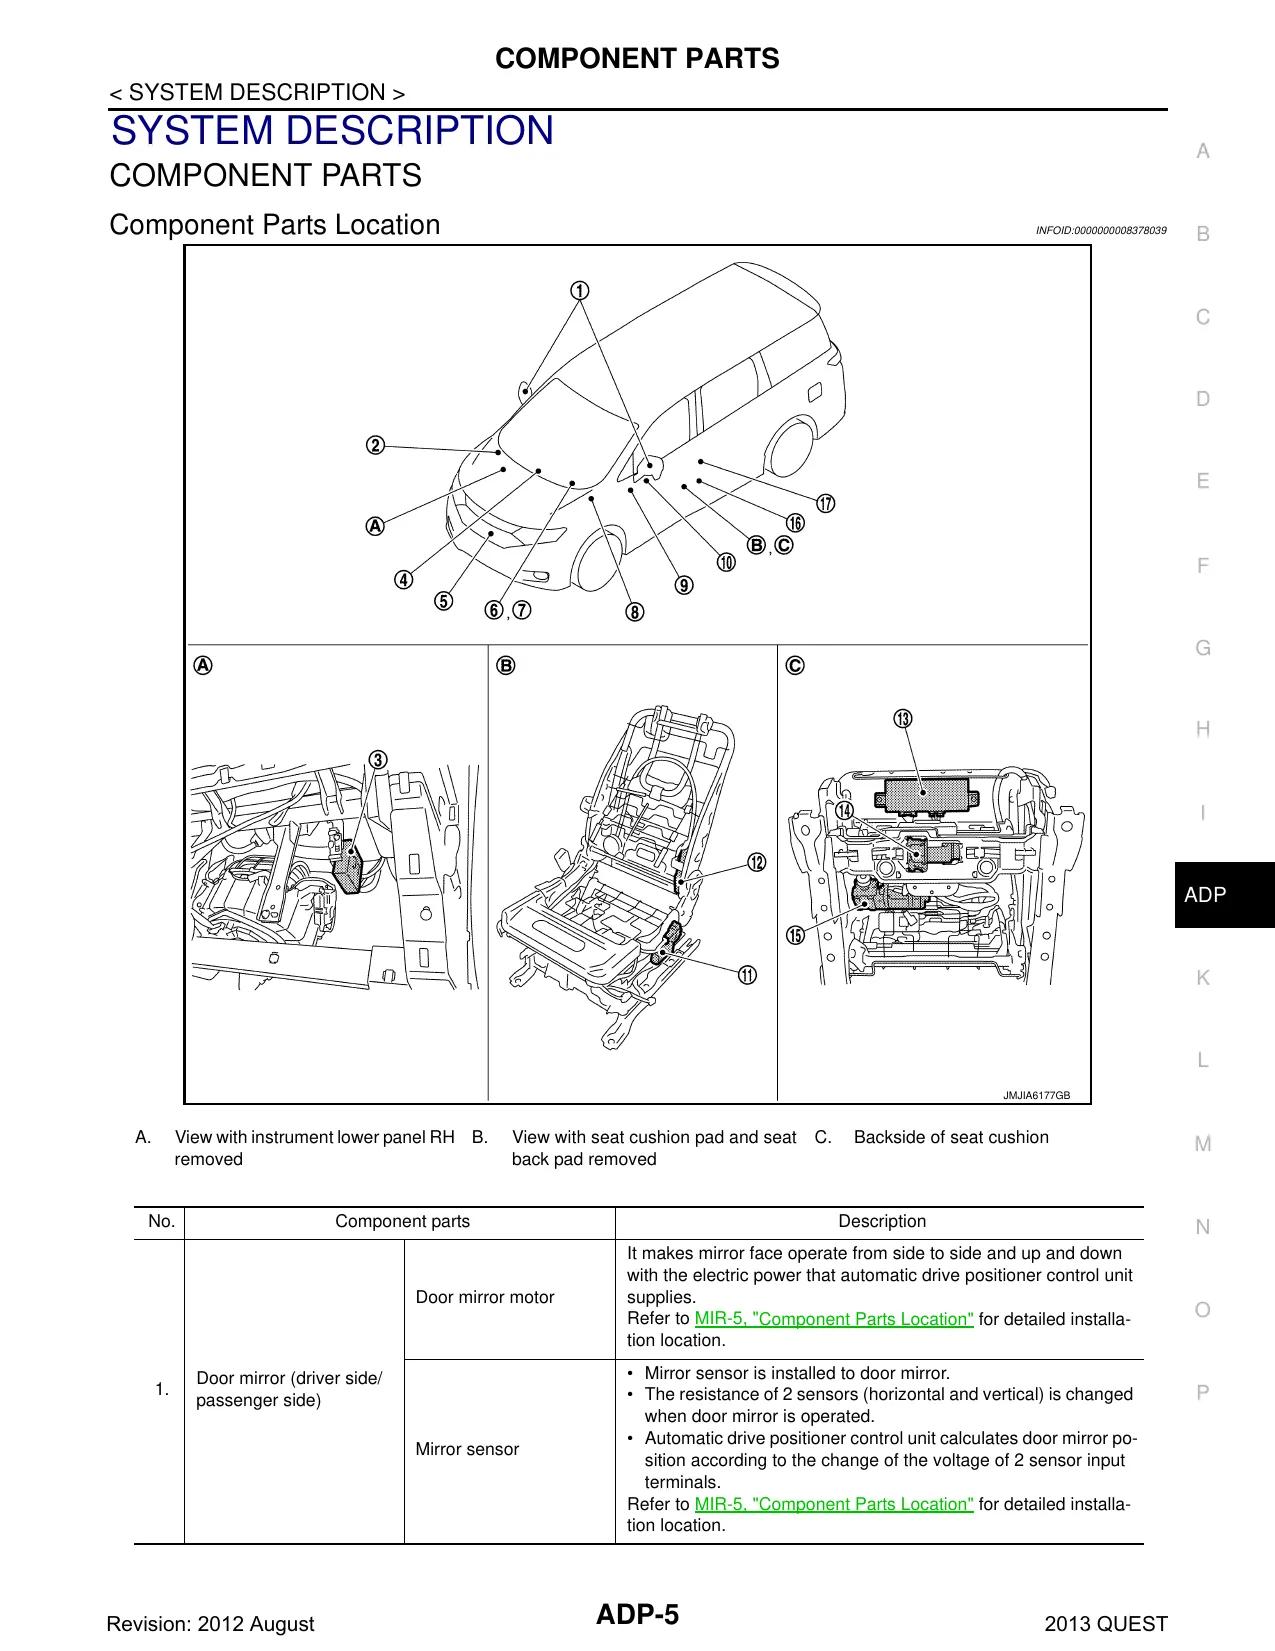 2013 Nissan Quest  E52 series repair manual Preview image 5